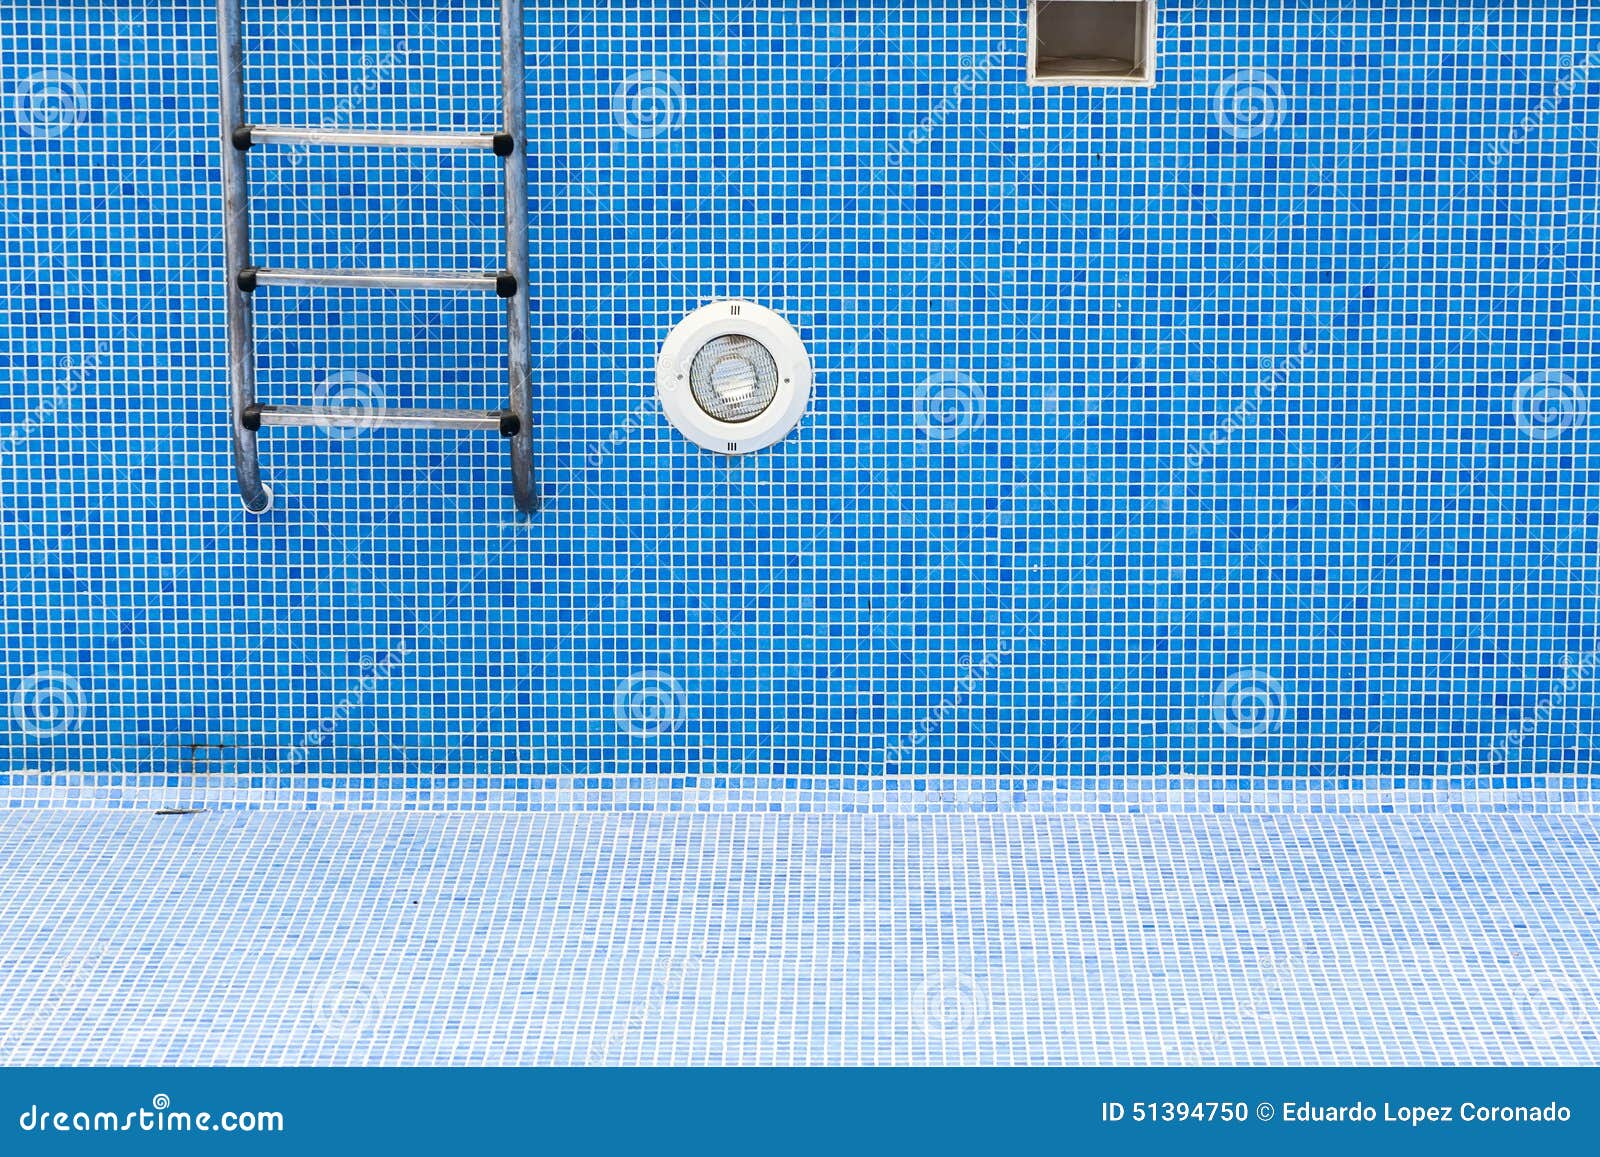 an empty swimming pool